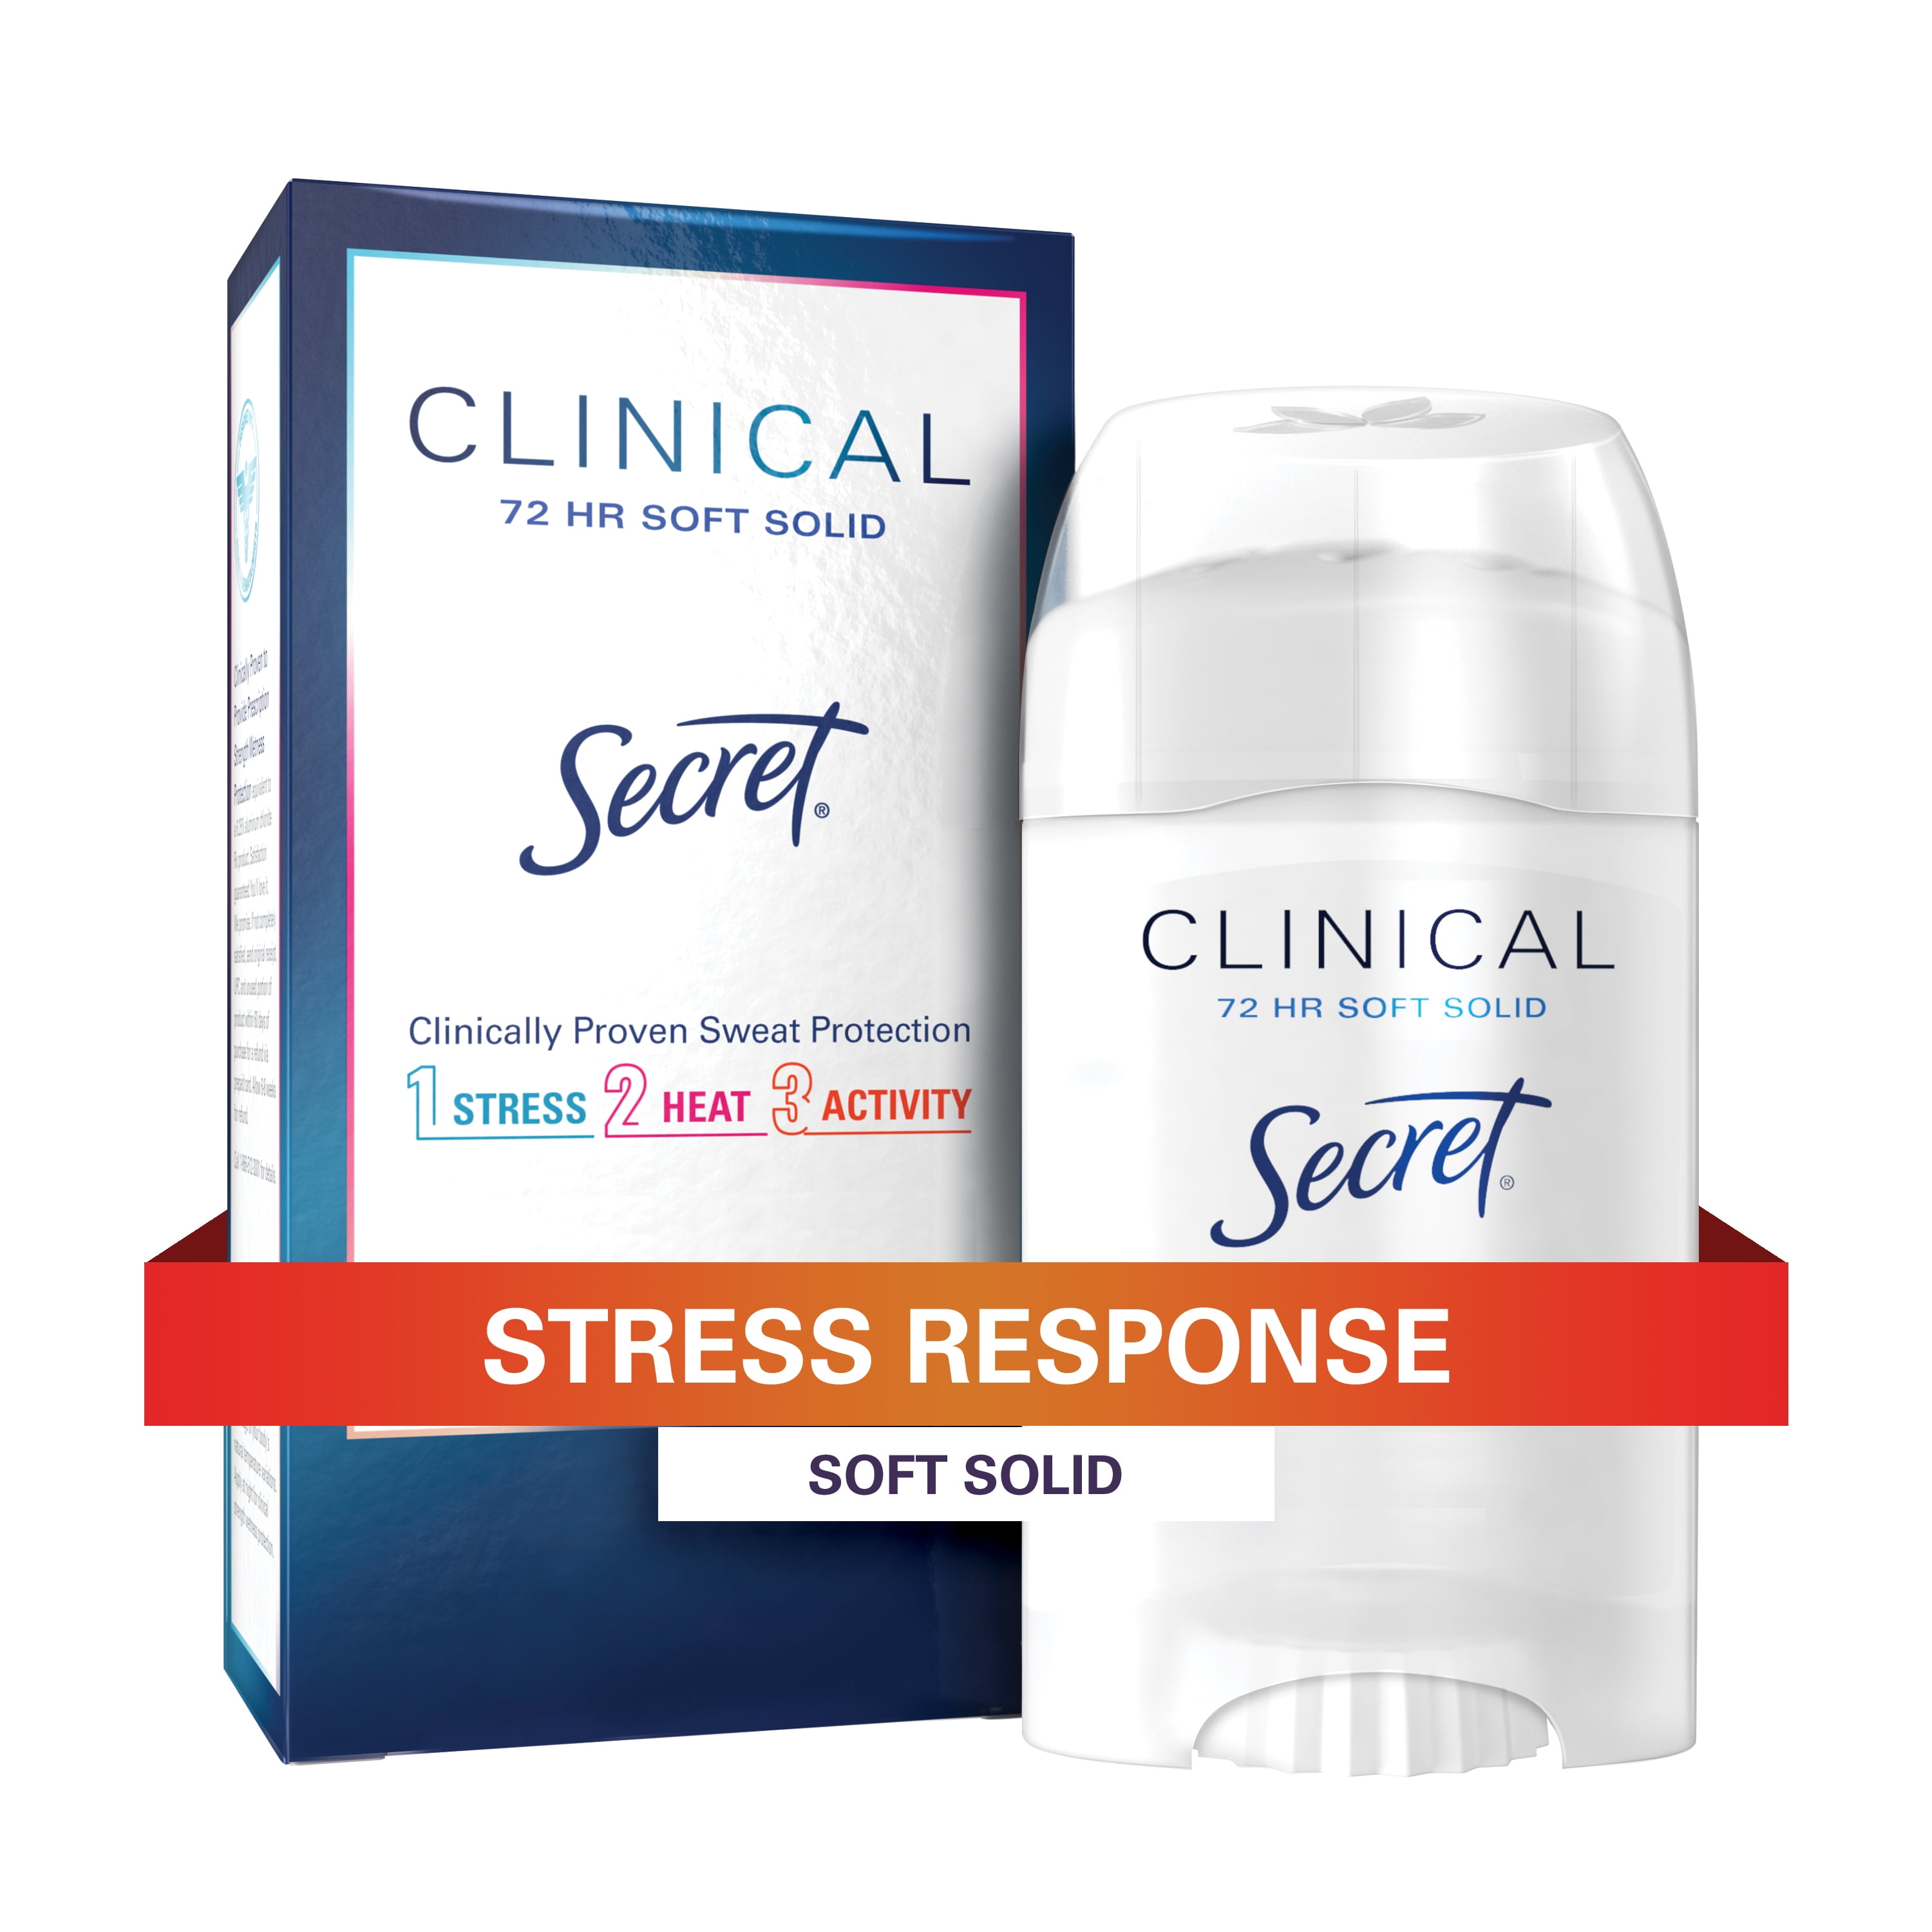 Secret Clinical Strength Soft Solid Antiperspirant and Deodorant, Stress Response, 1.6 oz